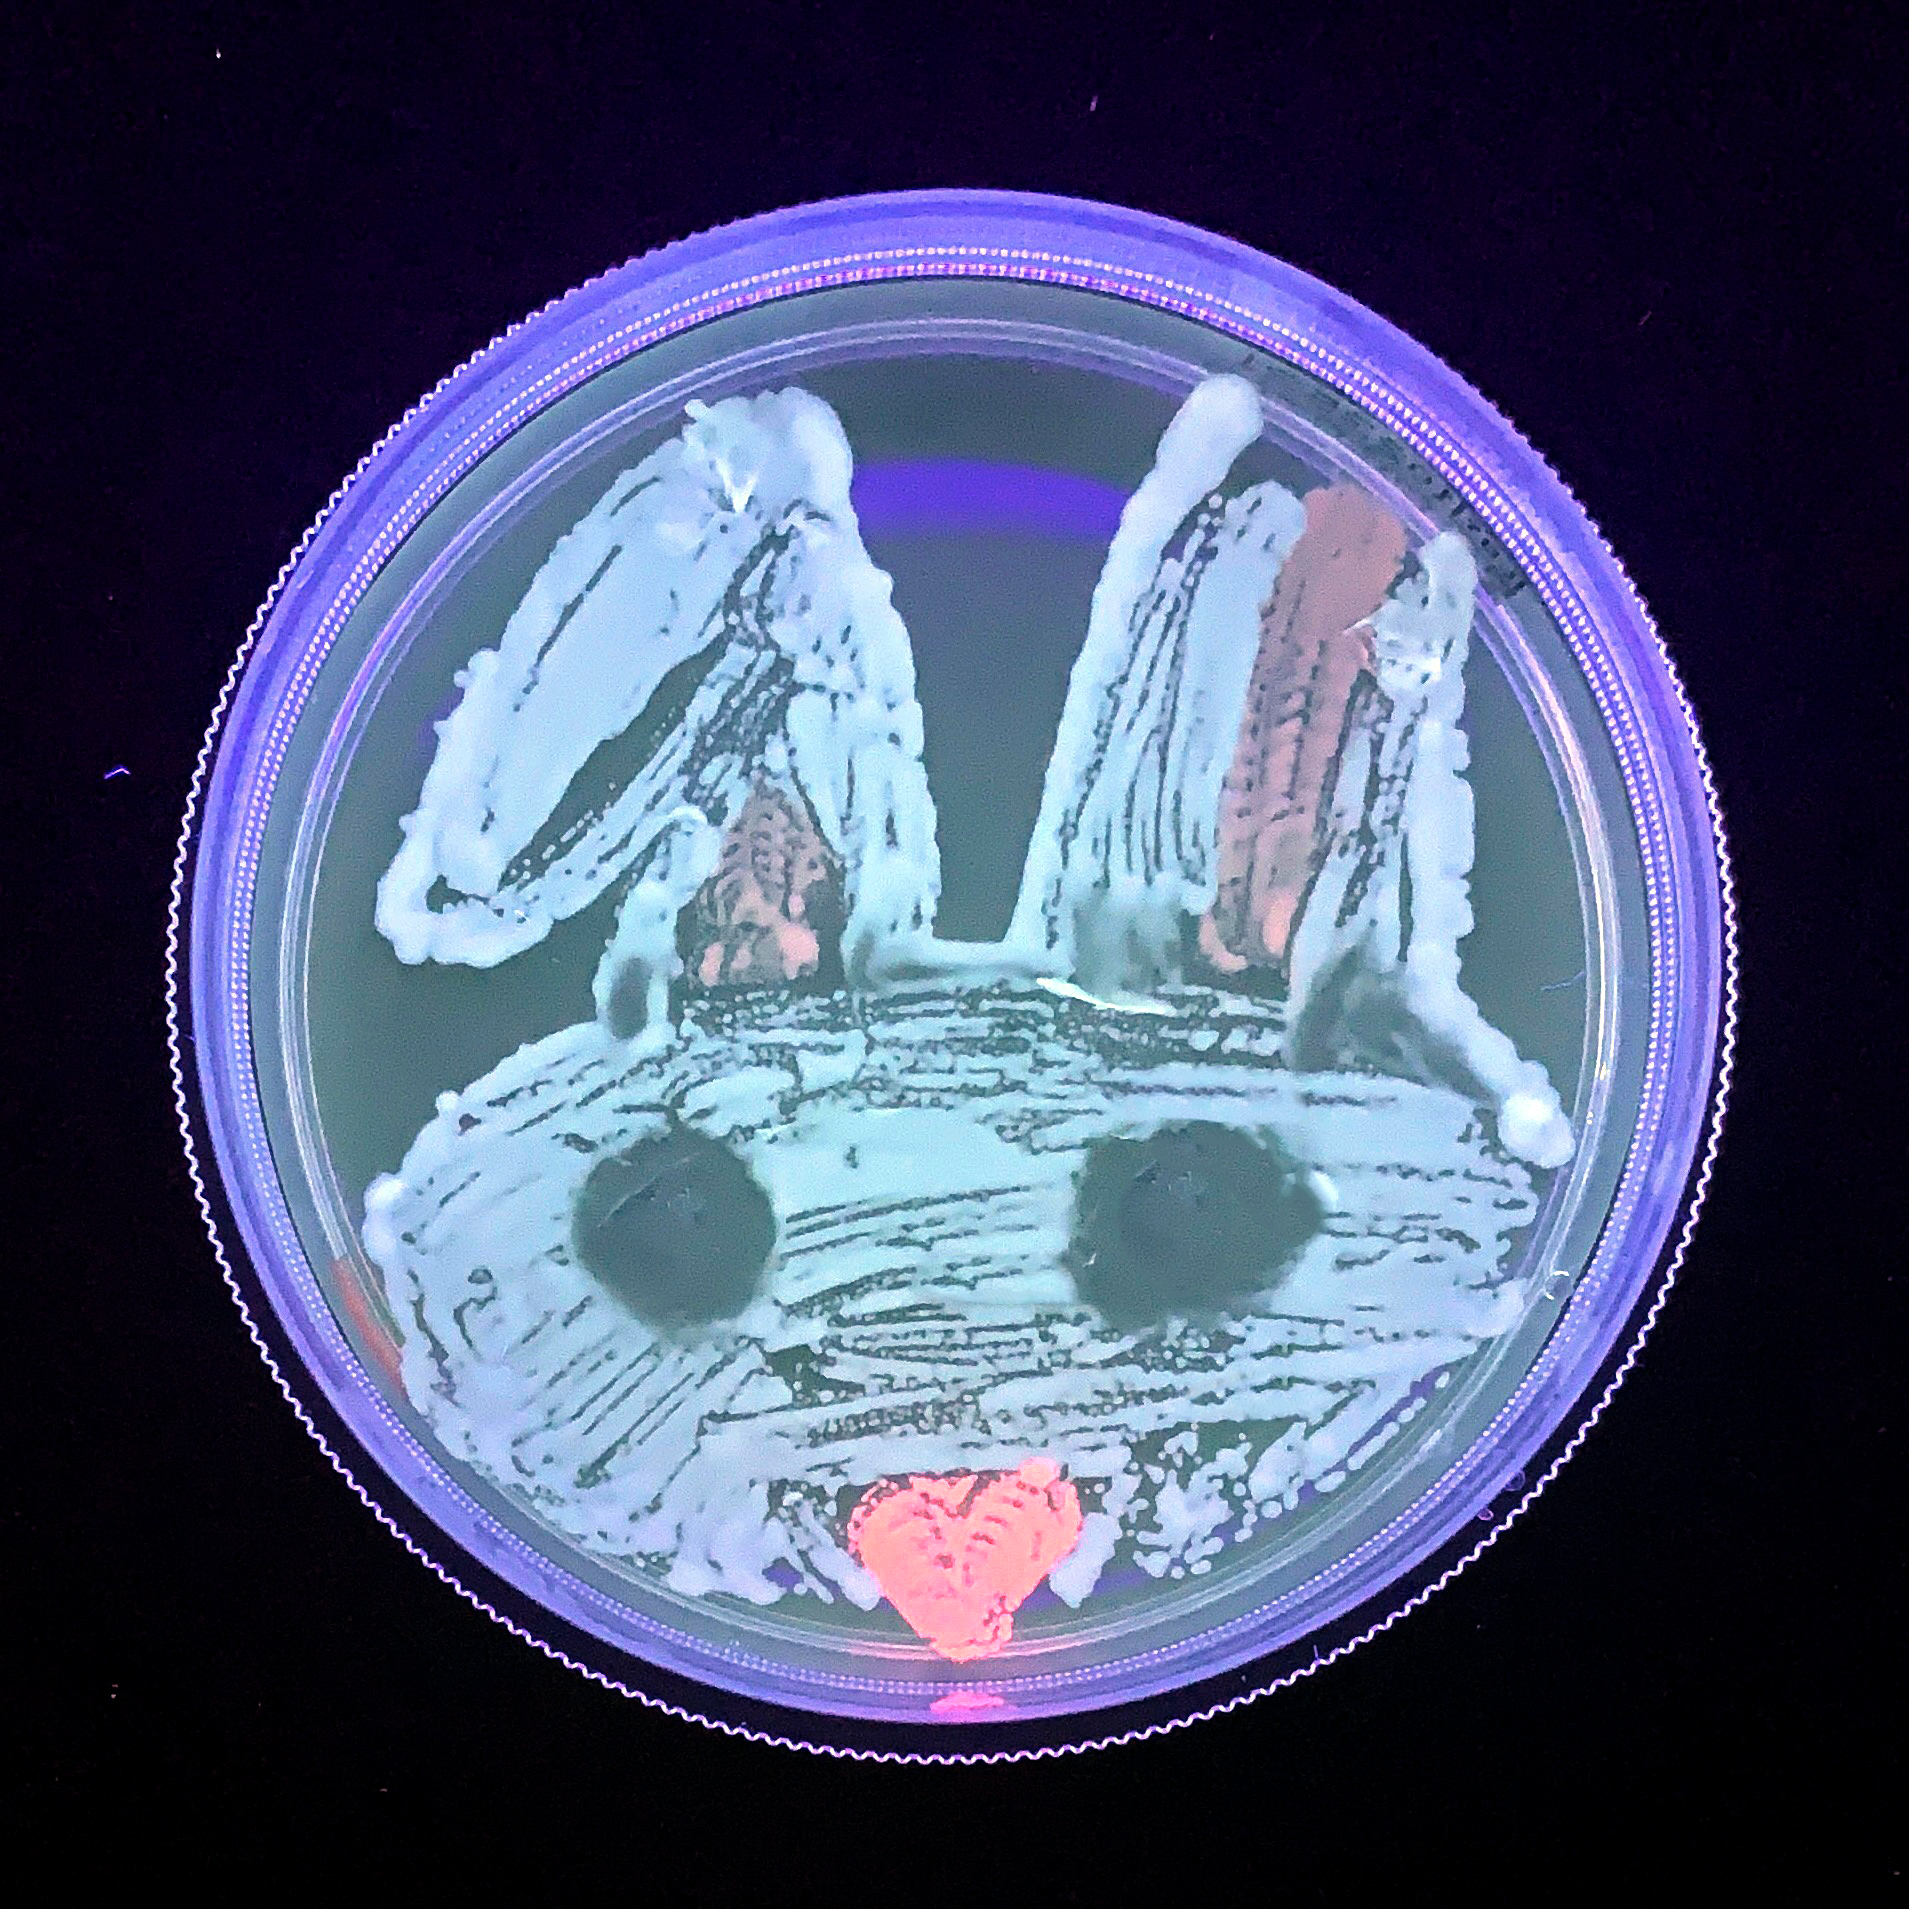 amino_labs_colored_yeast_agar_art_petri_dish_under_black_light.jpg